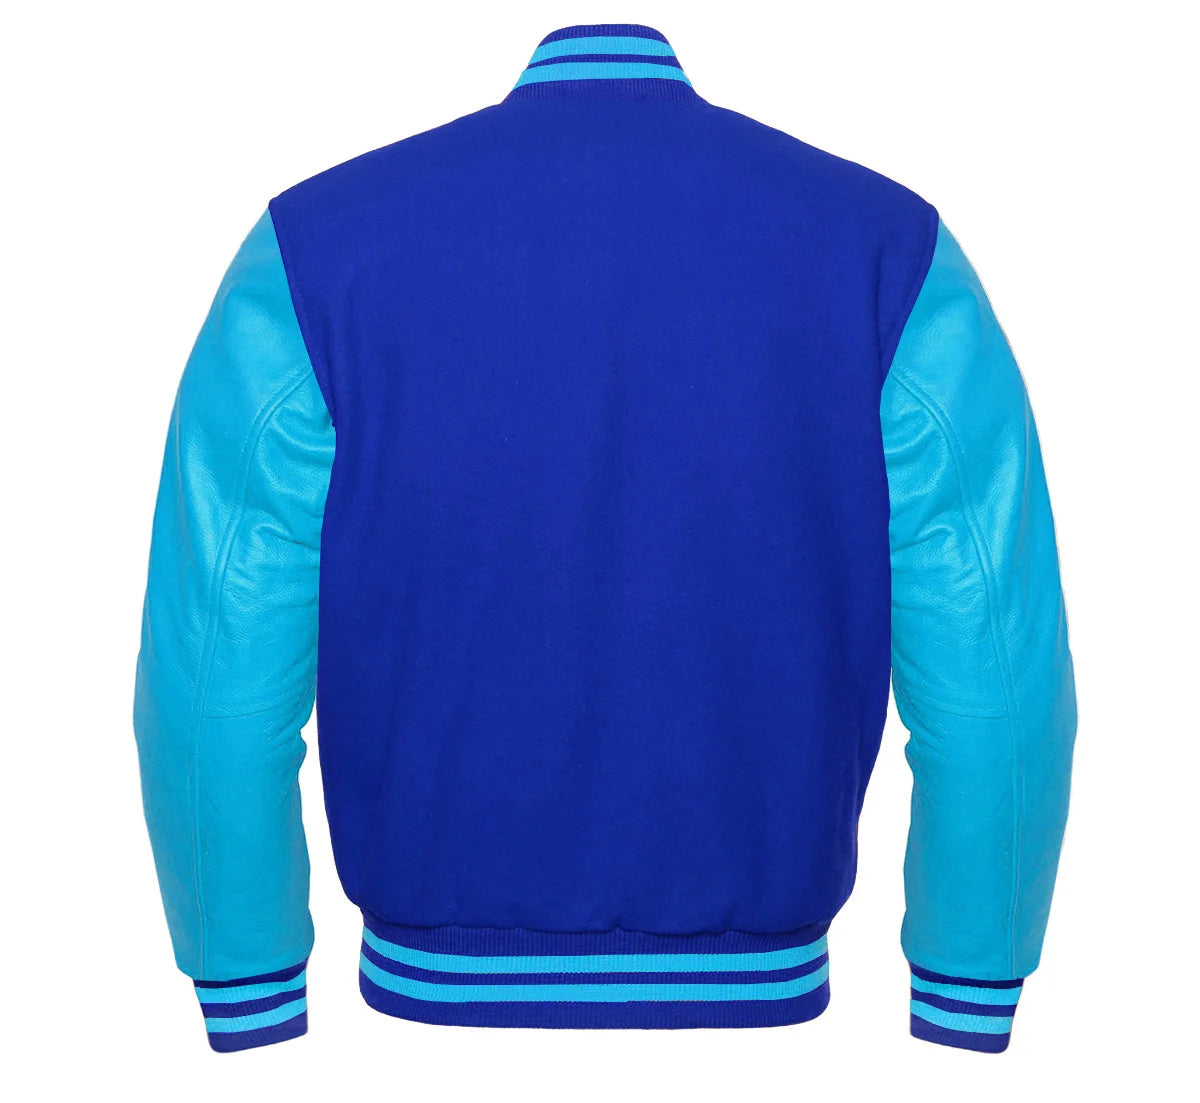 Royal Blue Varsity Jacket Back Side